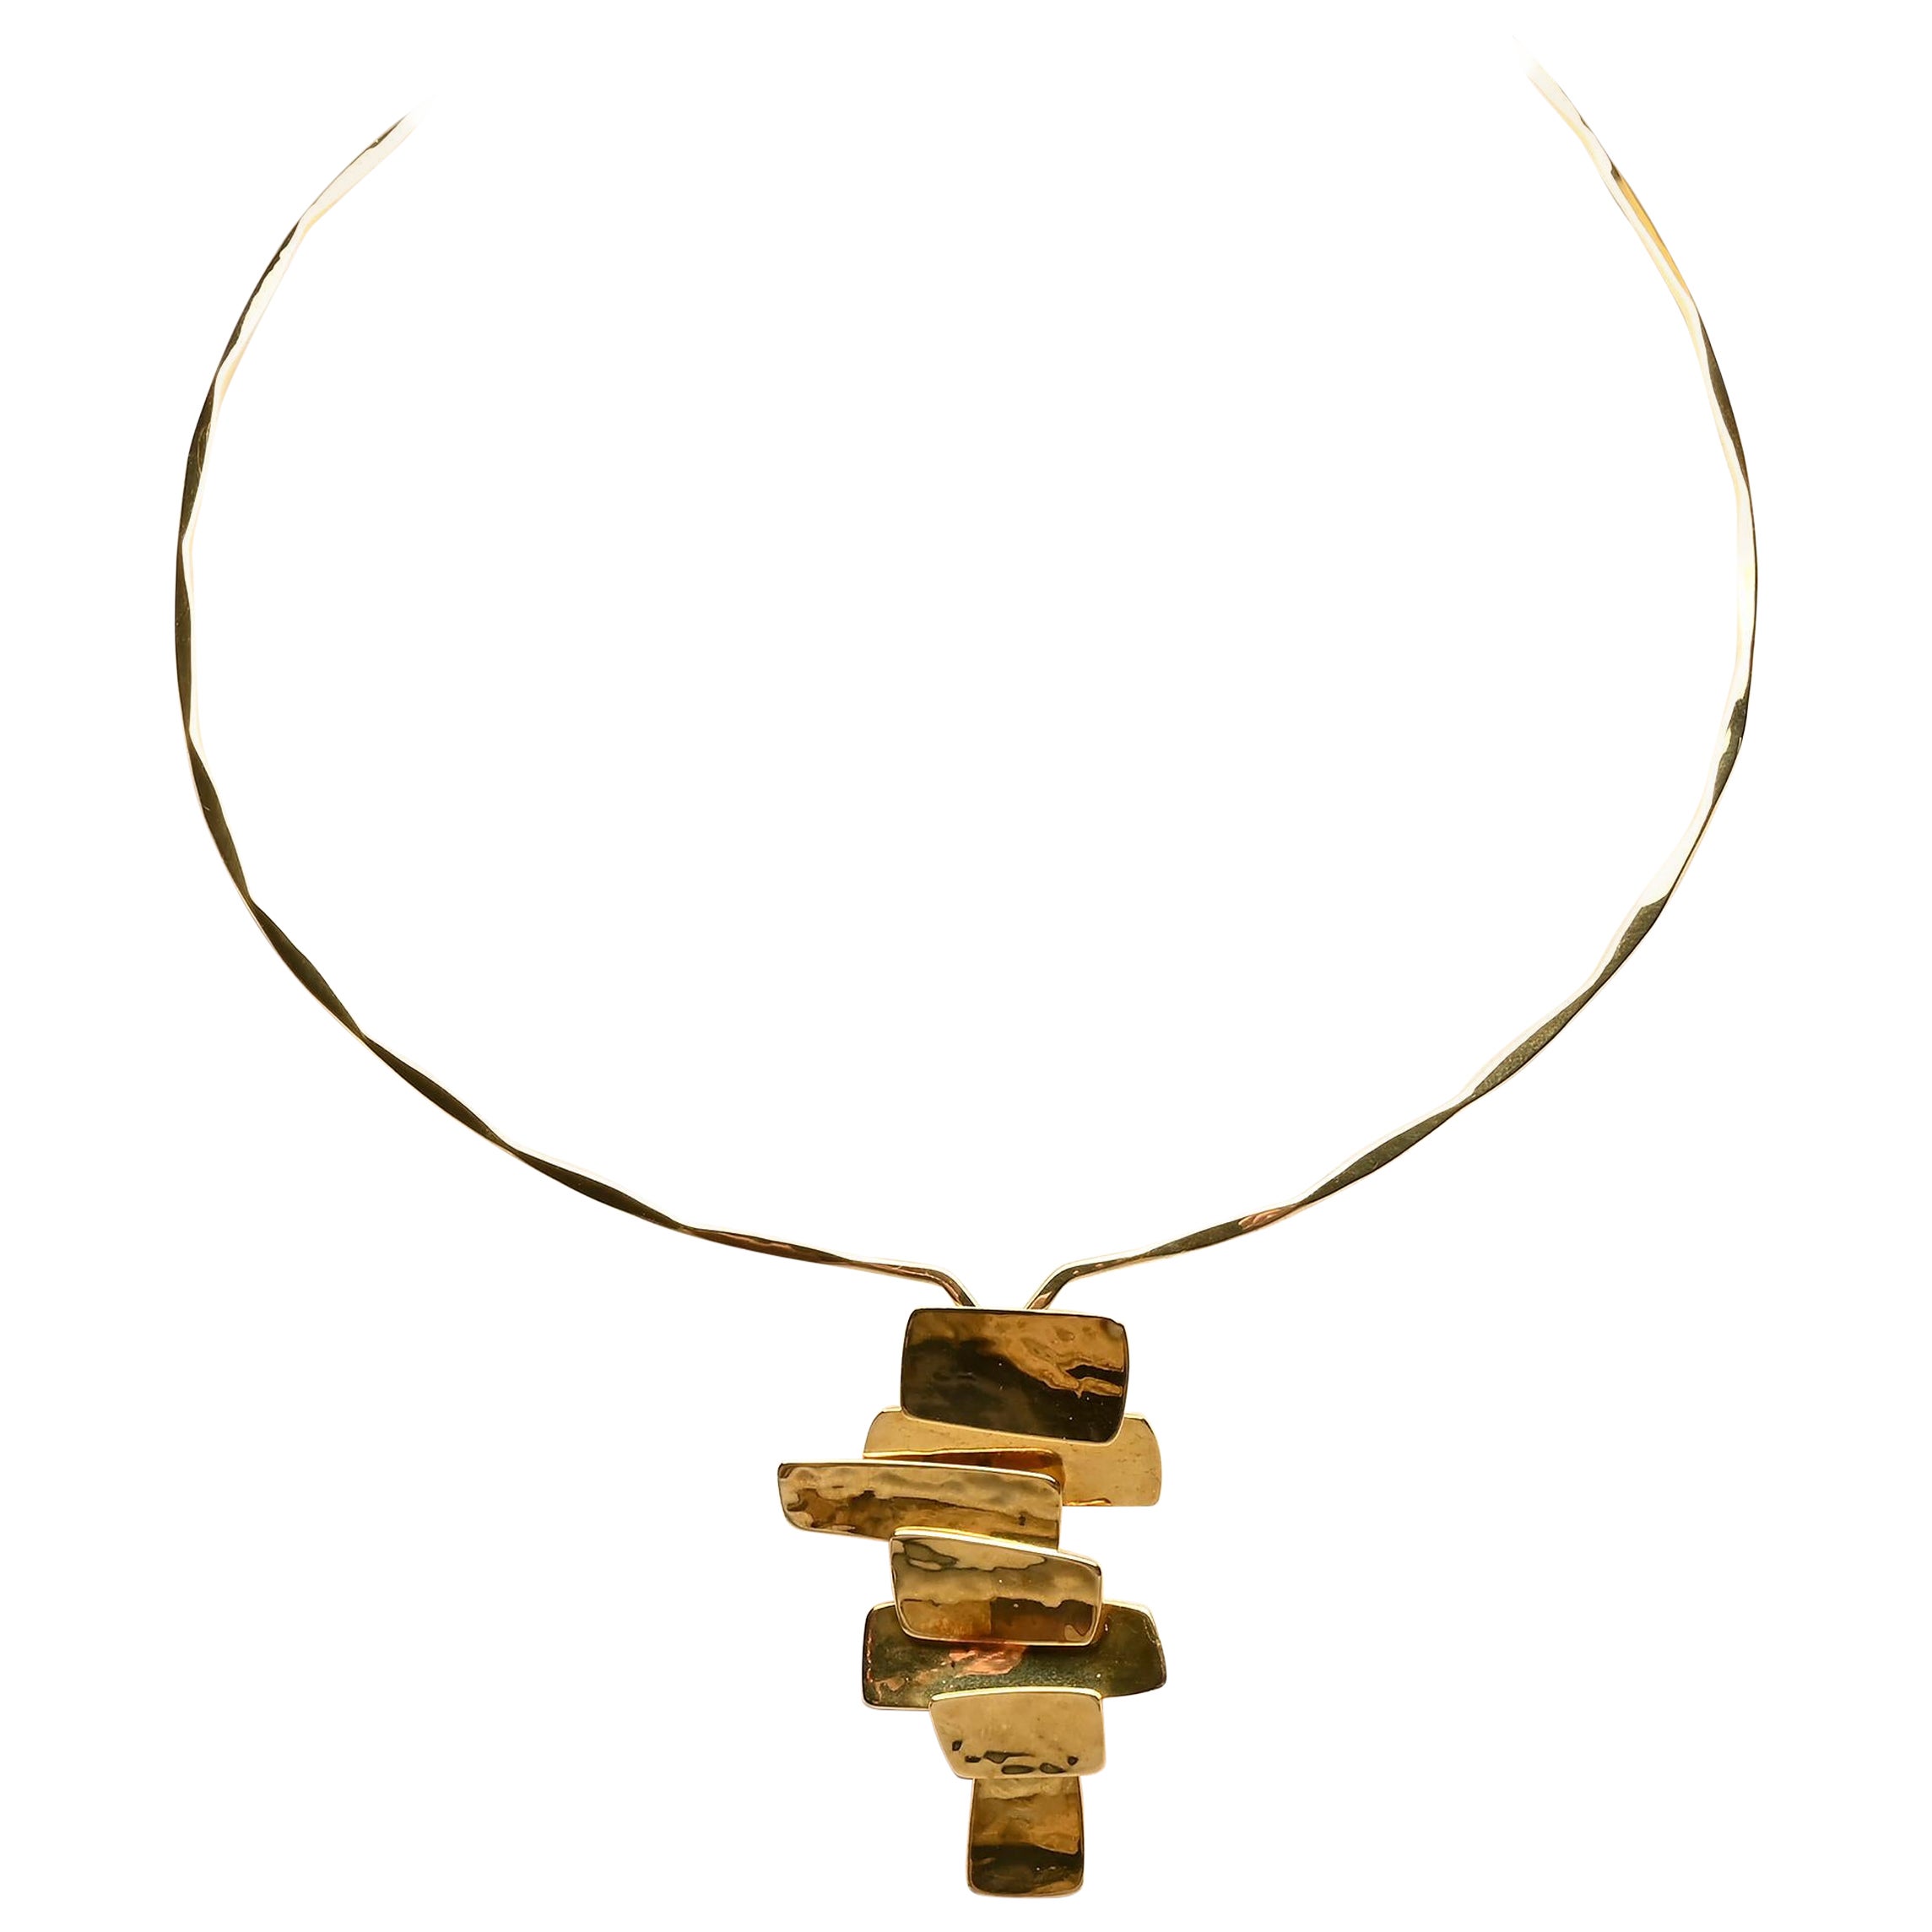 Robert Lee Morris 18 Karat Gold Choker Pendant Necklace